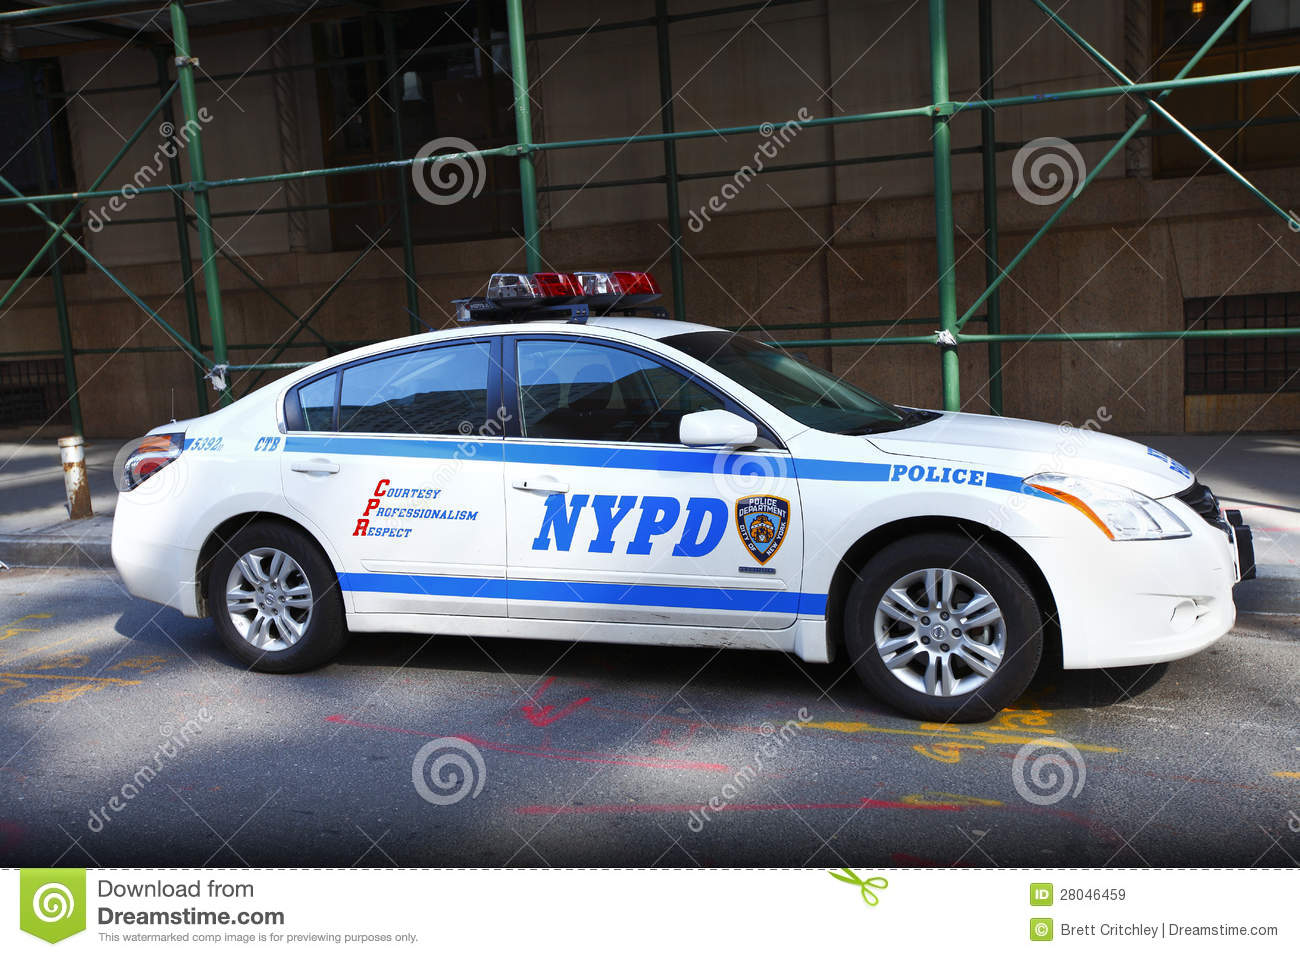 nypd-police-car-28046459.jpg